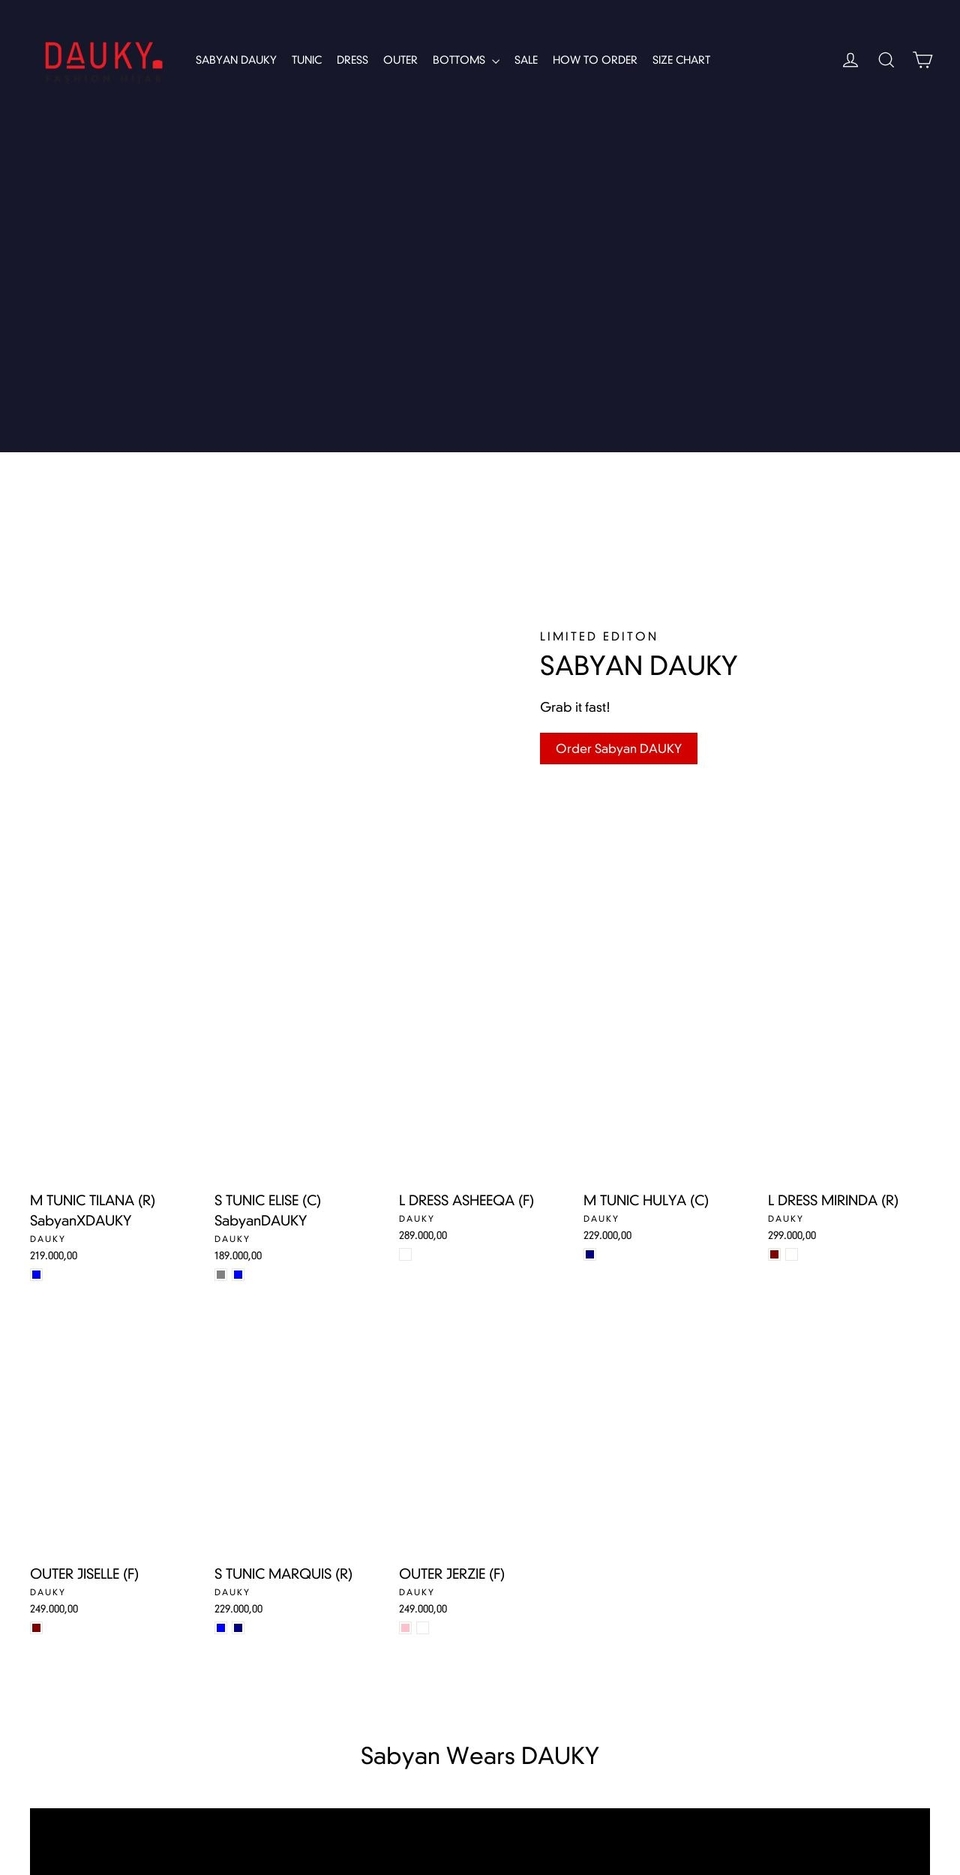 dauky.co.id shopify website screenshot